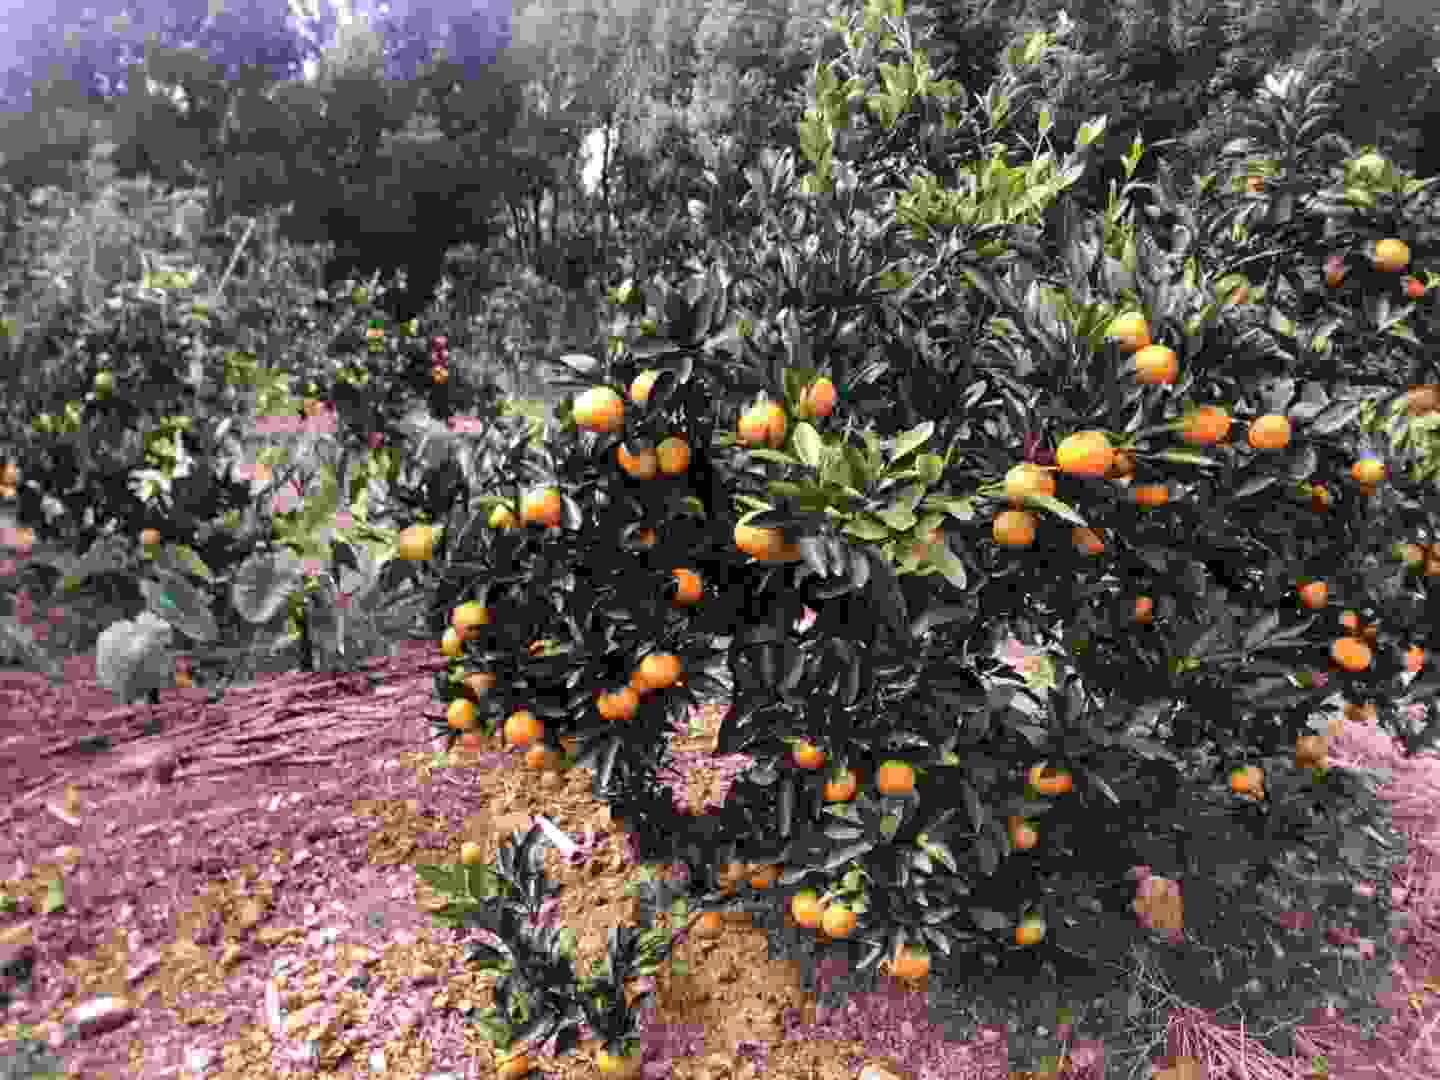 Company activities - Picking oranges